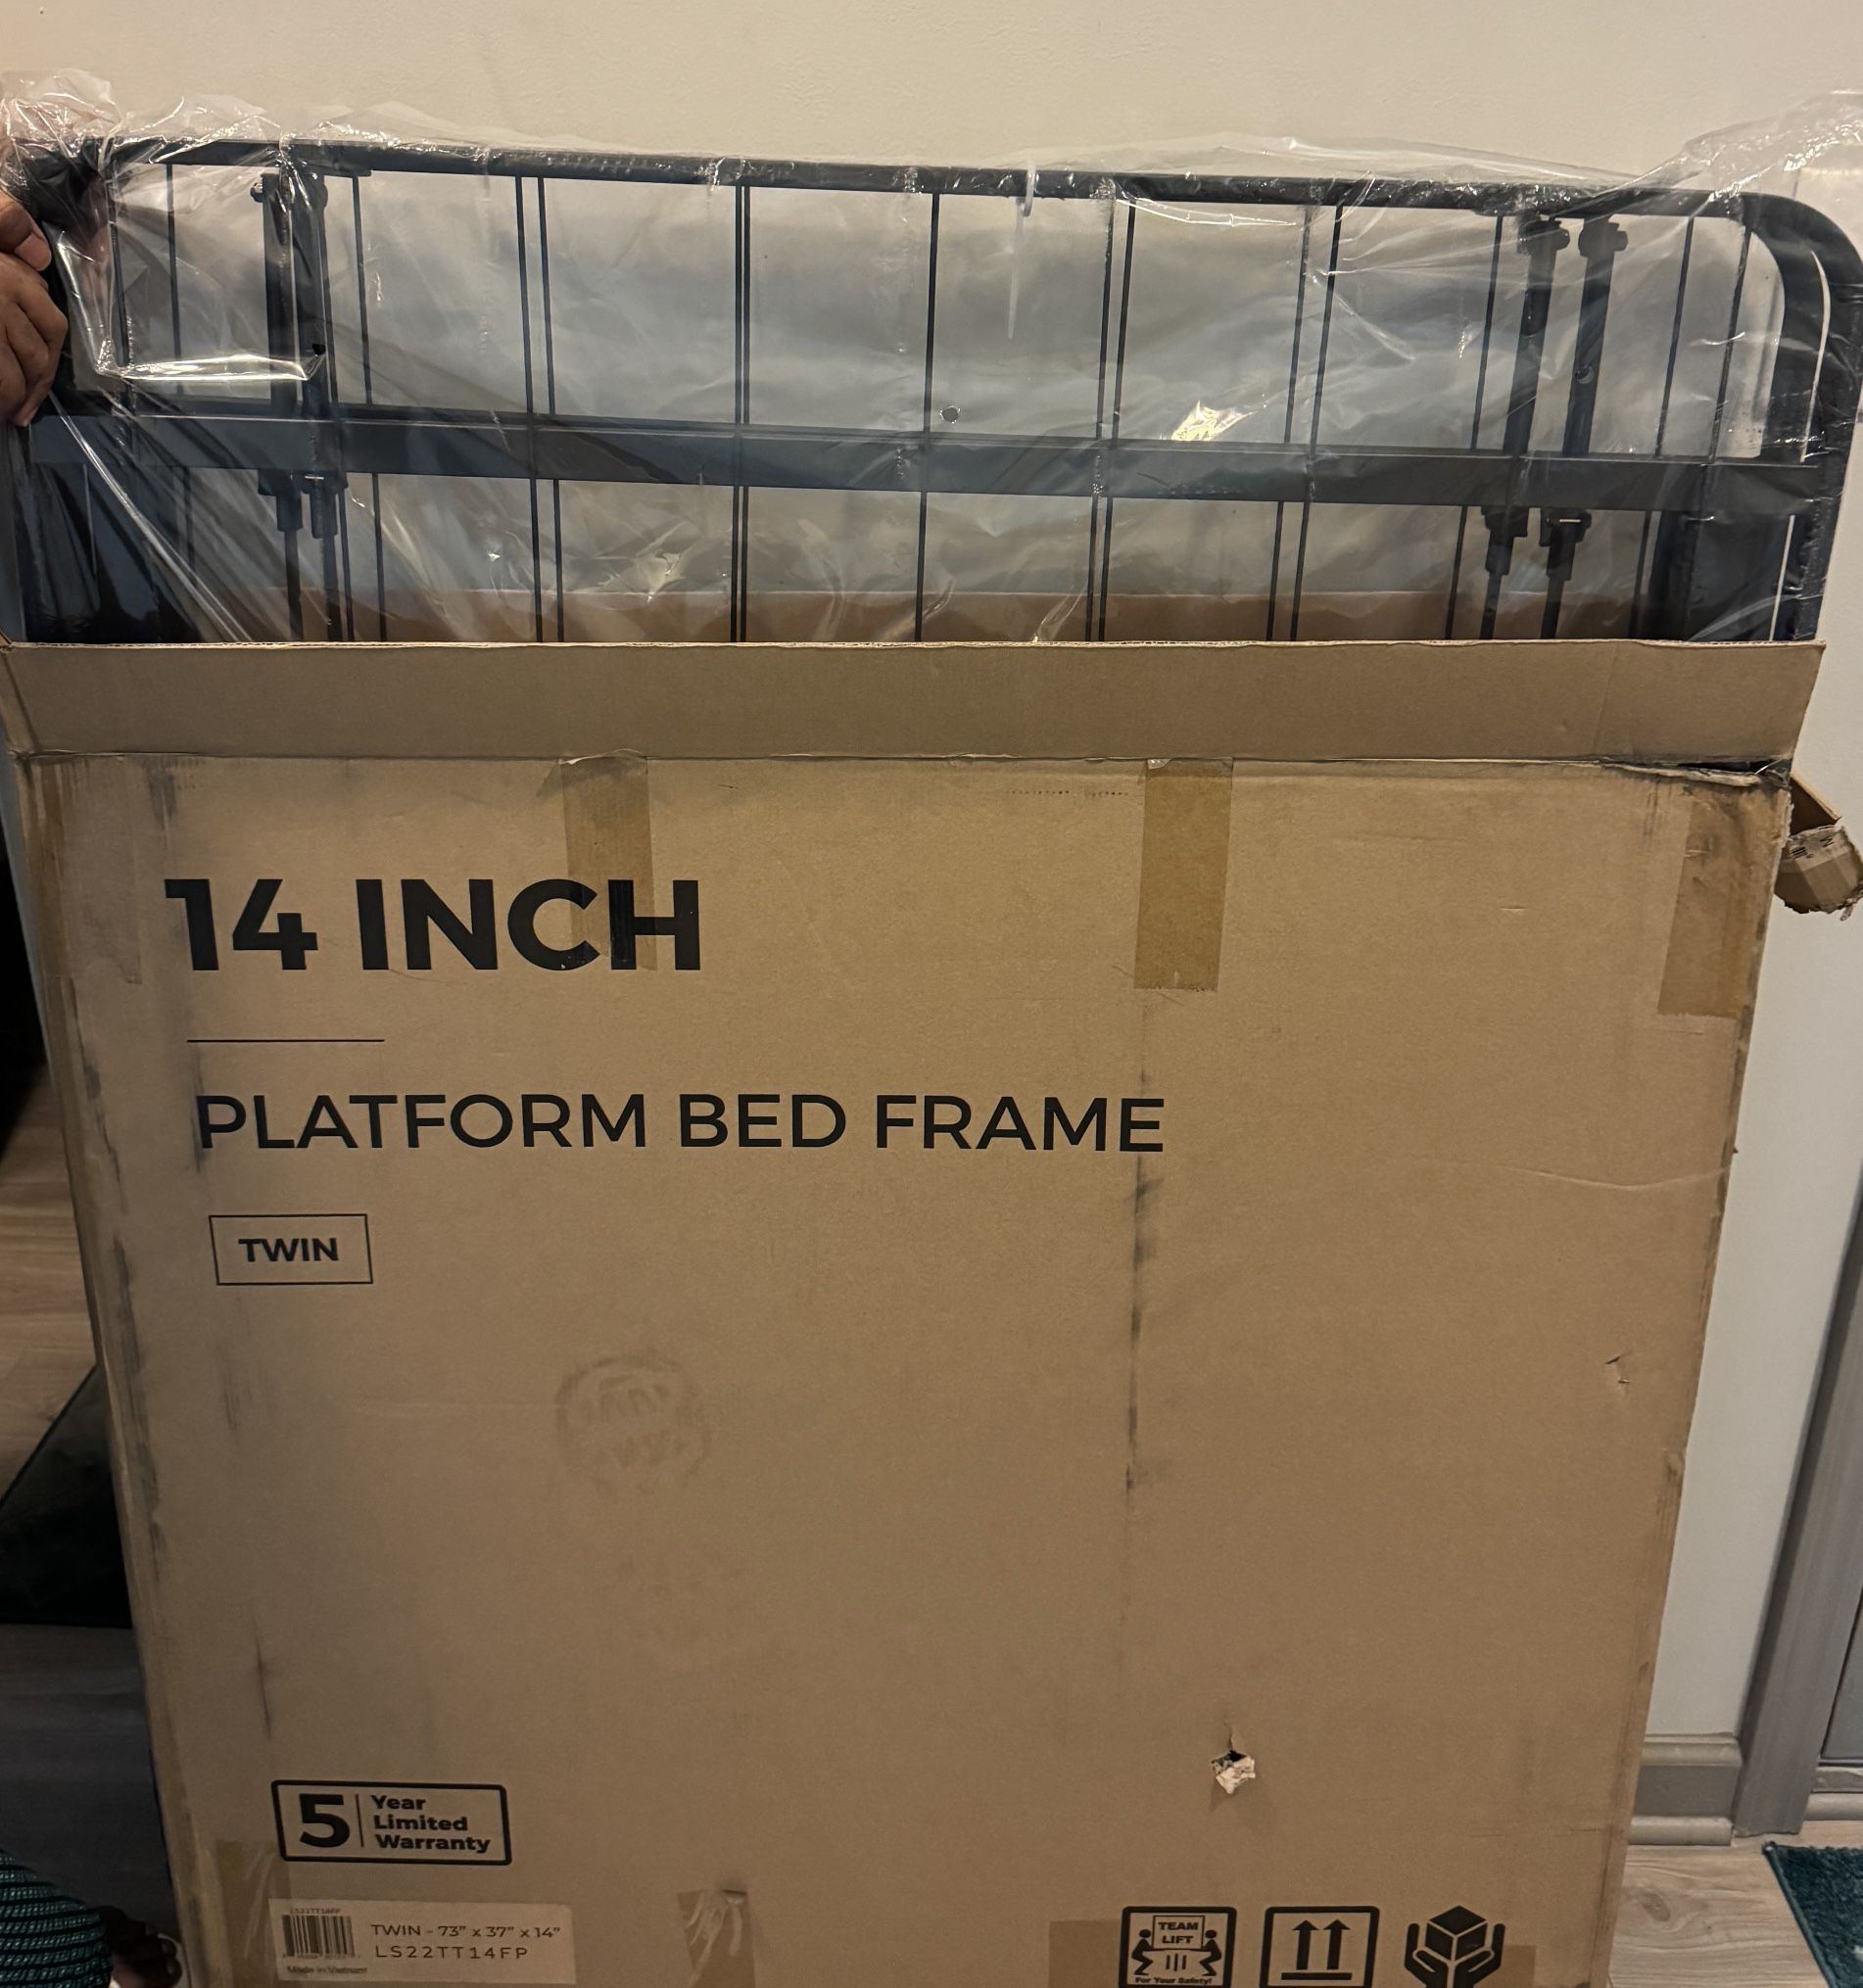 Never Used - Linenspa Folding Metal Platform Bed Frame - No Box Spring Needed - Underbed Storage